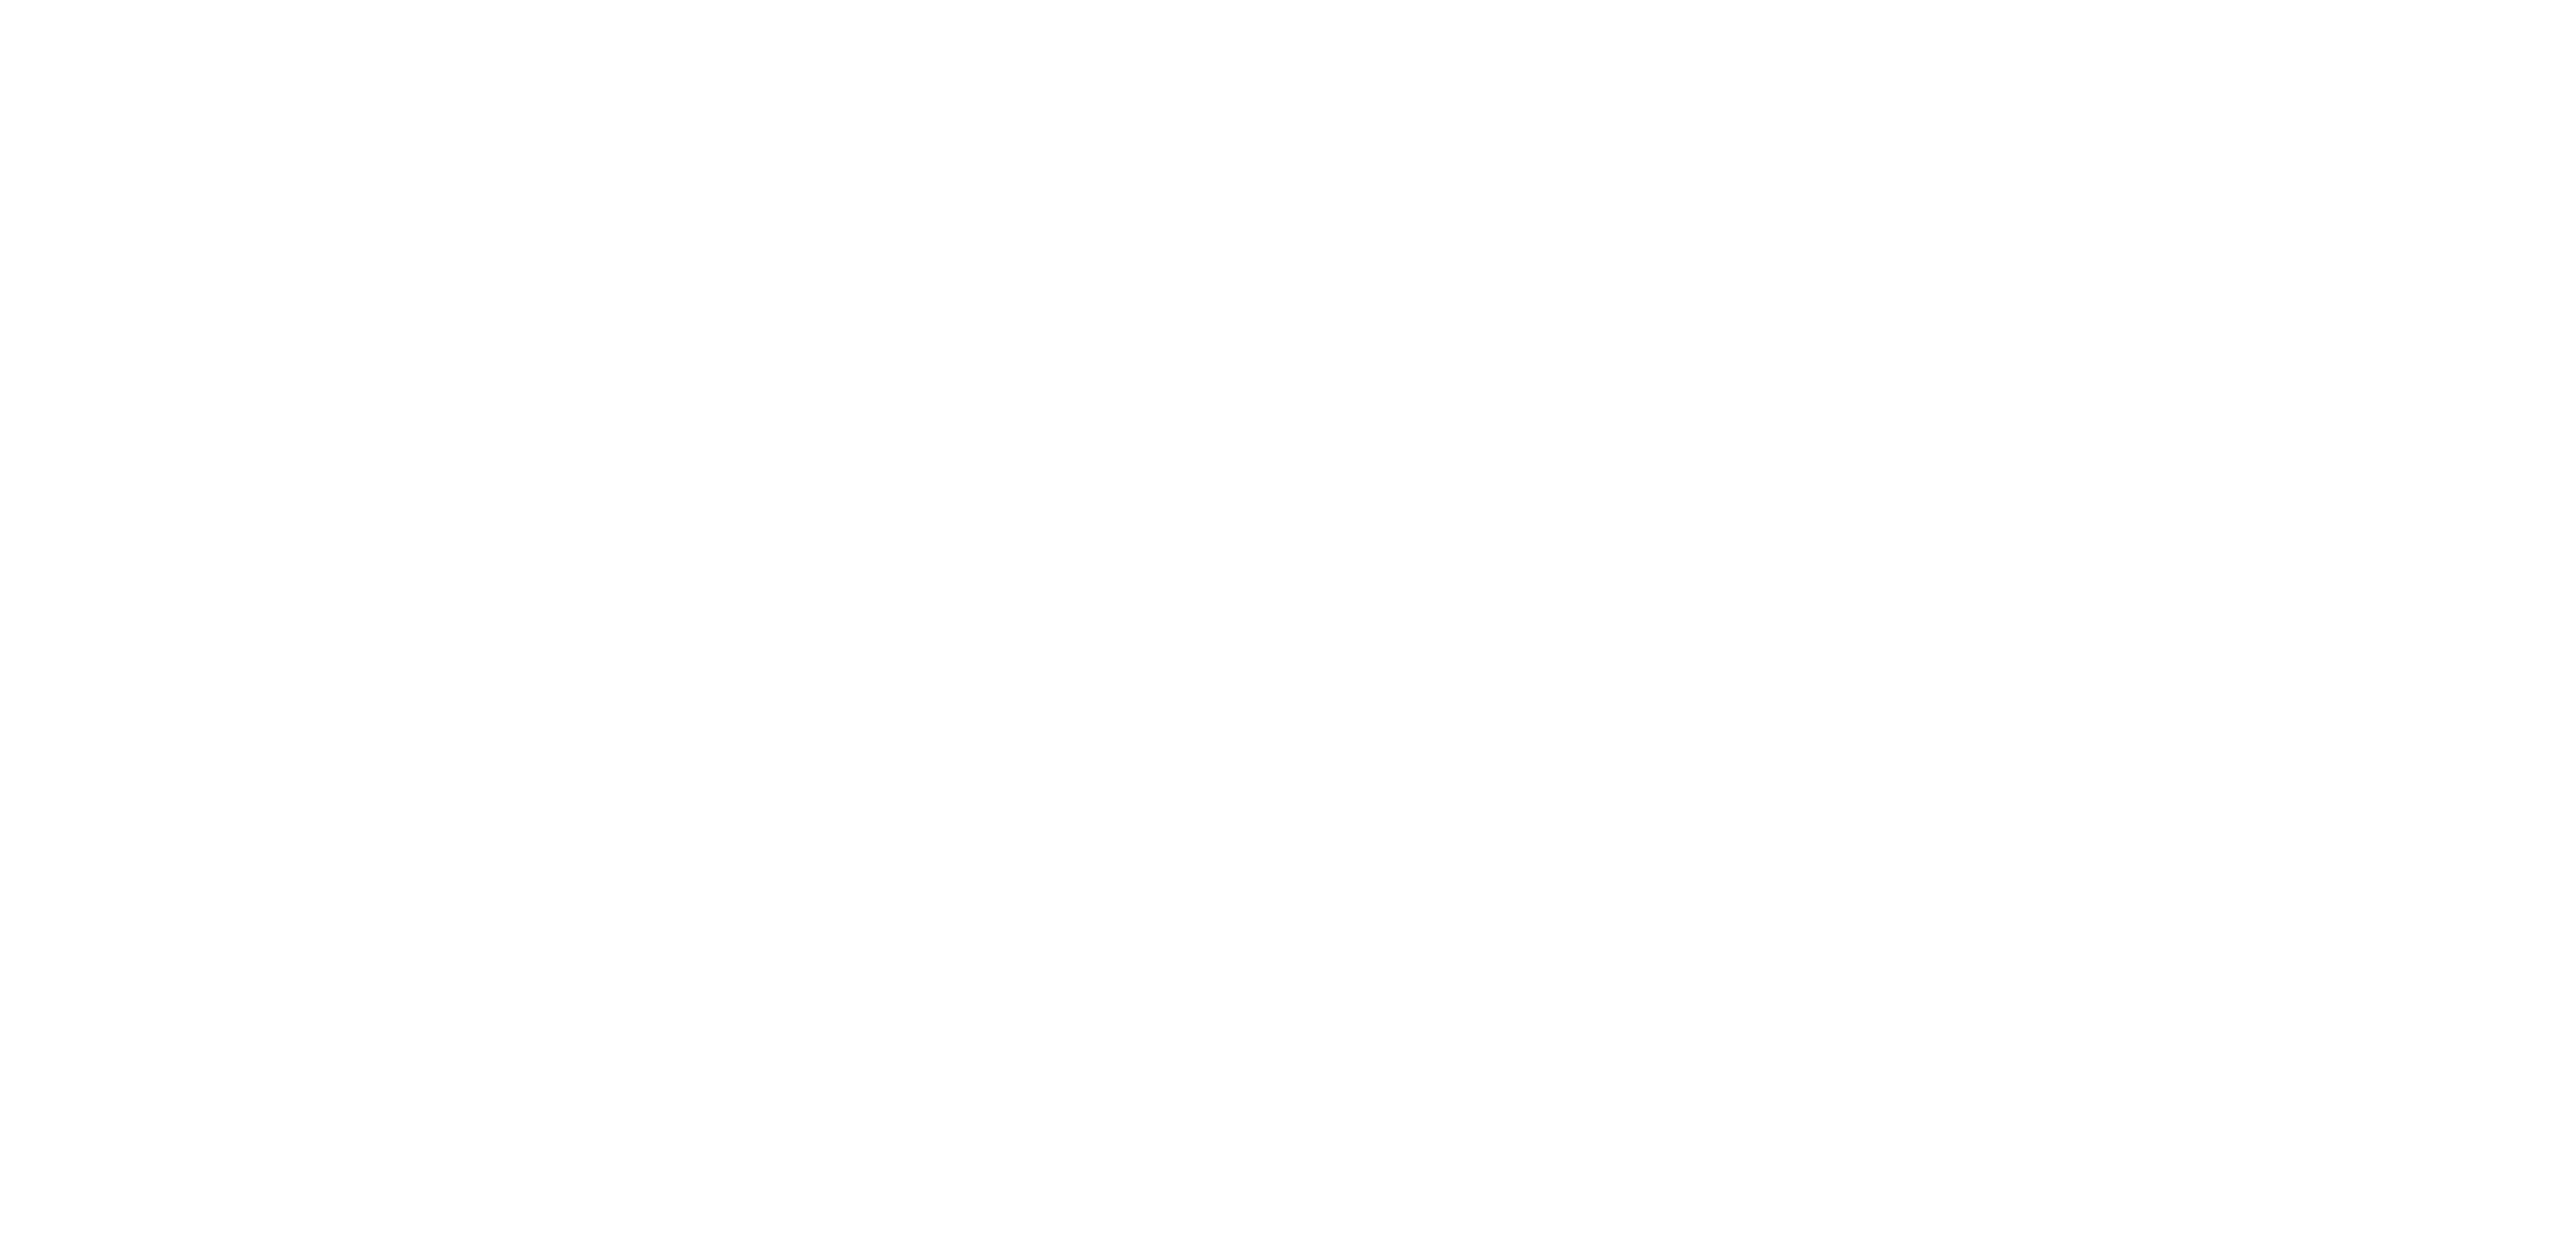 Oklahoma Performance Contracting